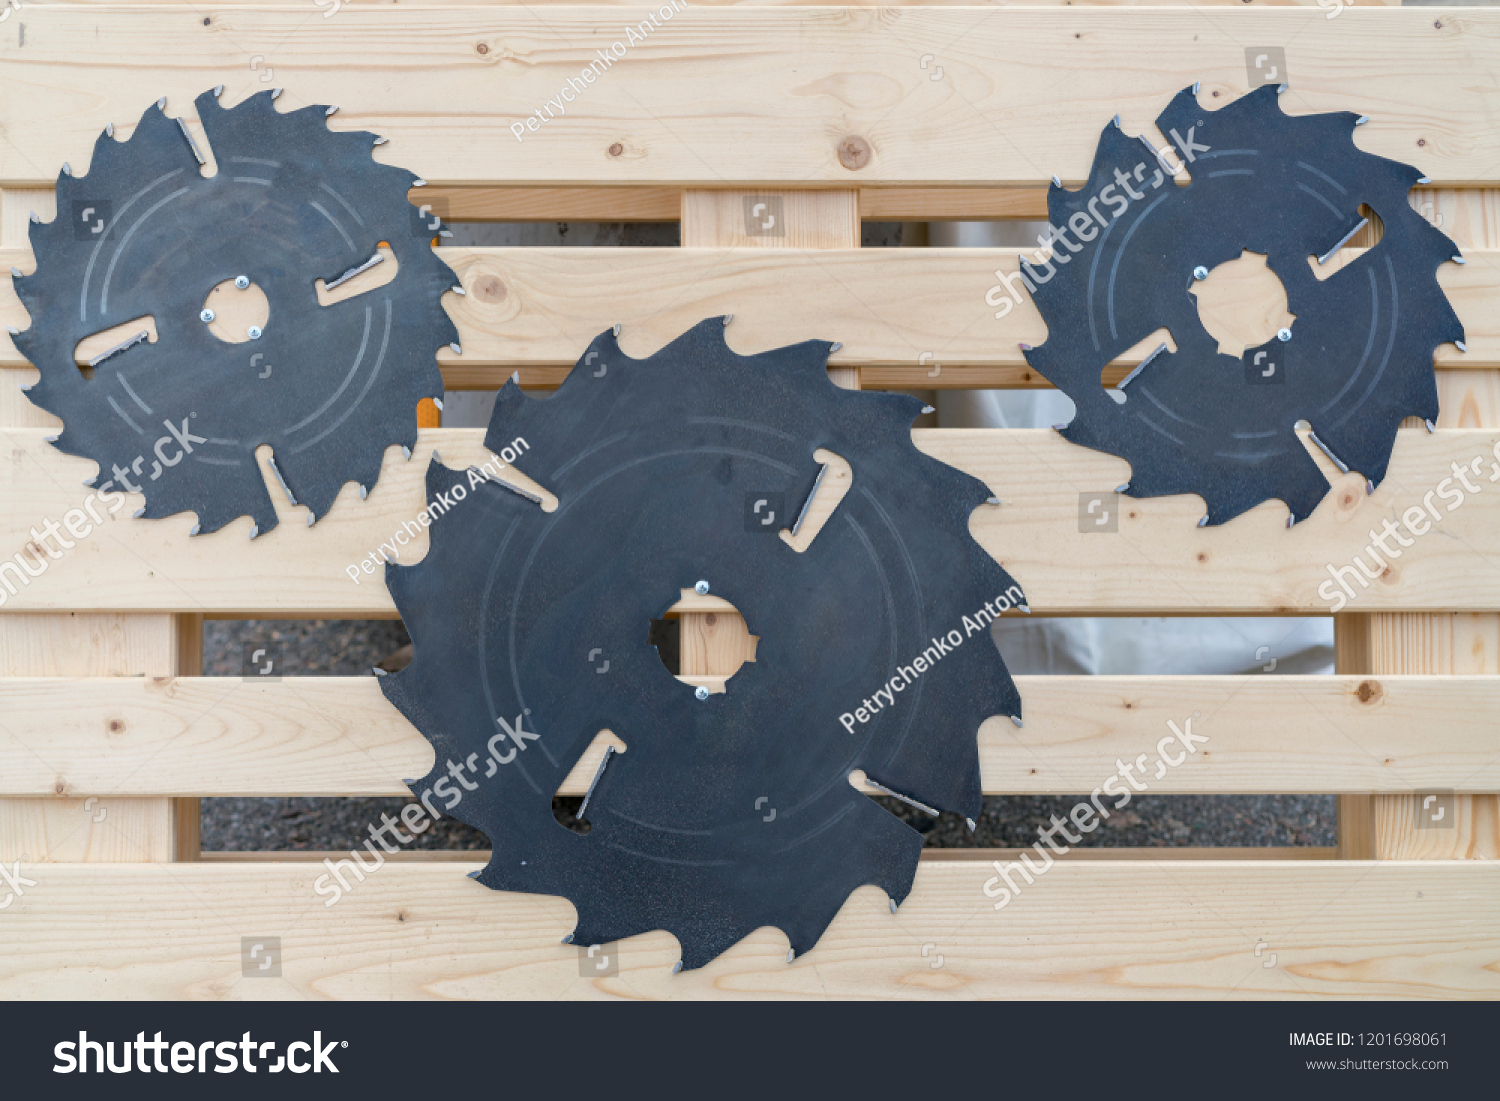 Circular saws. Circular saw blades for wood work #1201698061